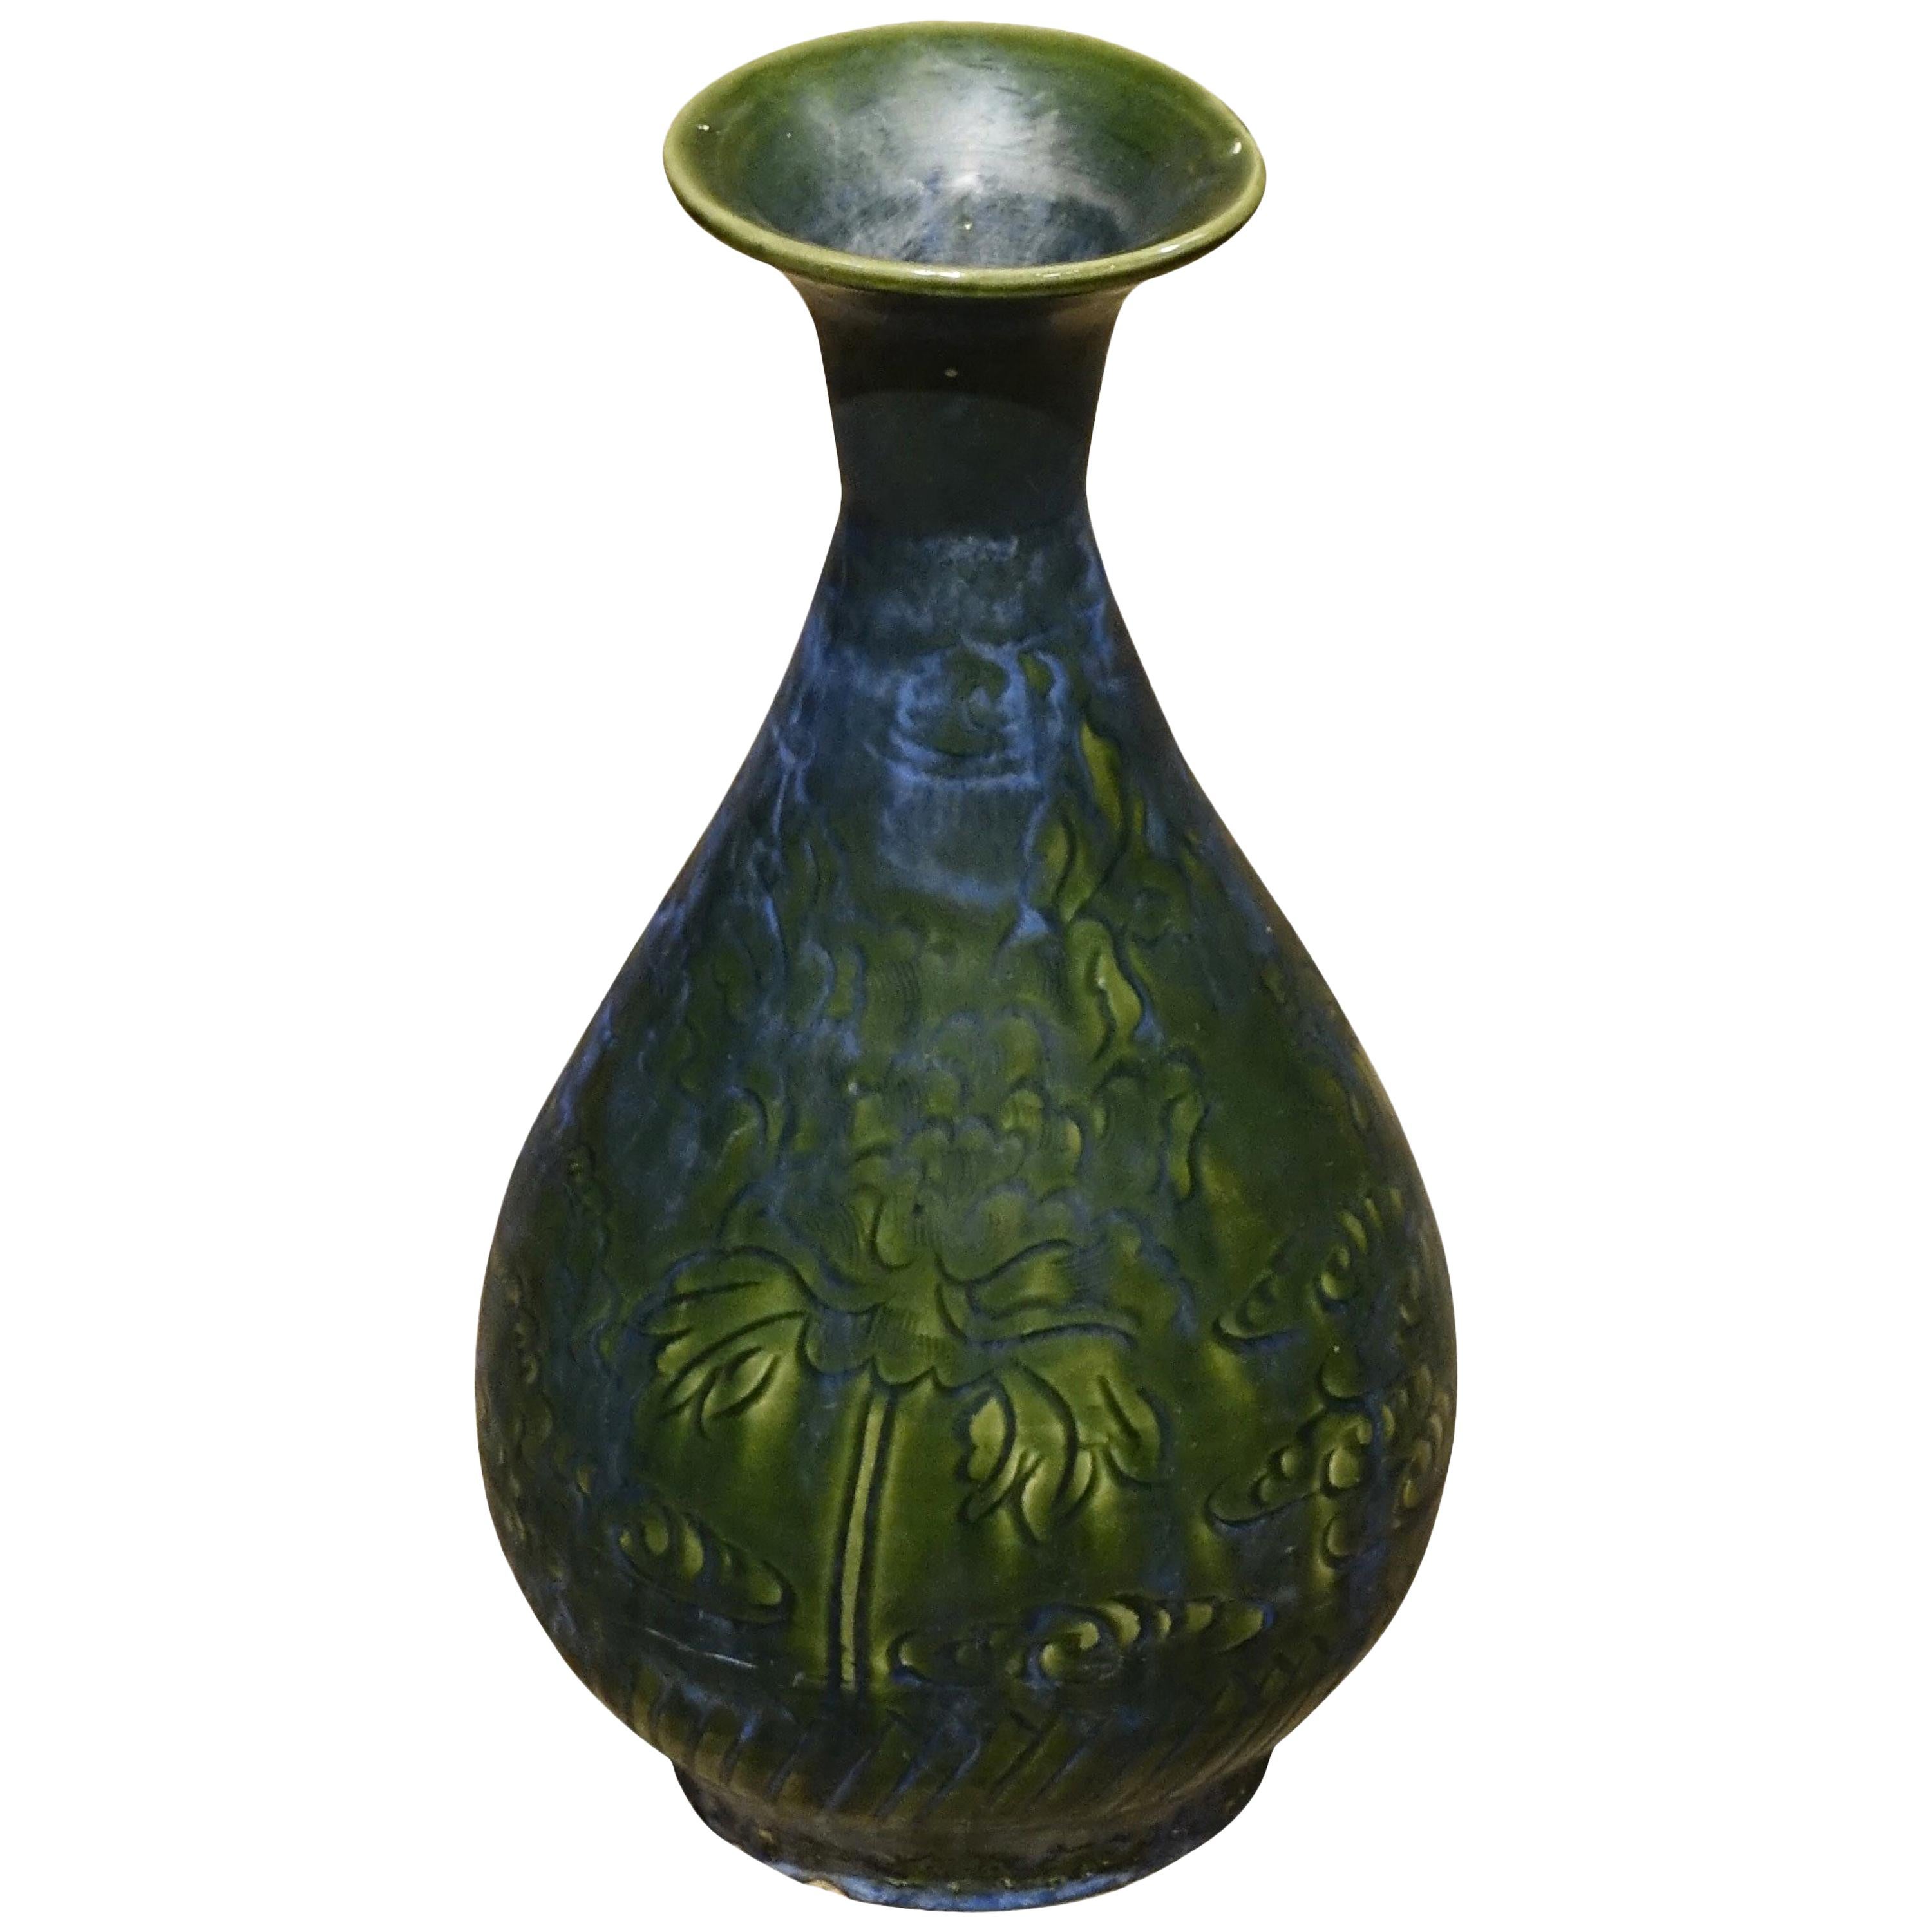 Engraved Decorative Pattern Vase, China, Contemporary